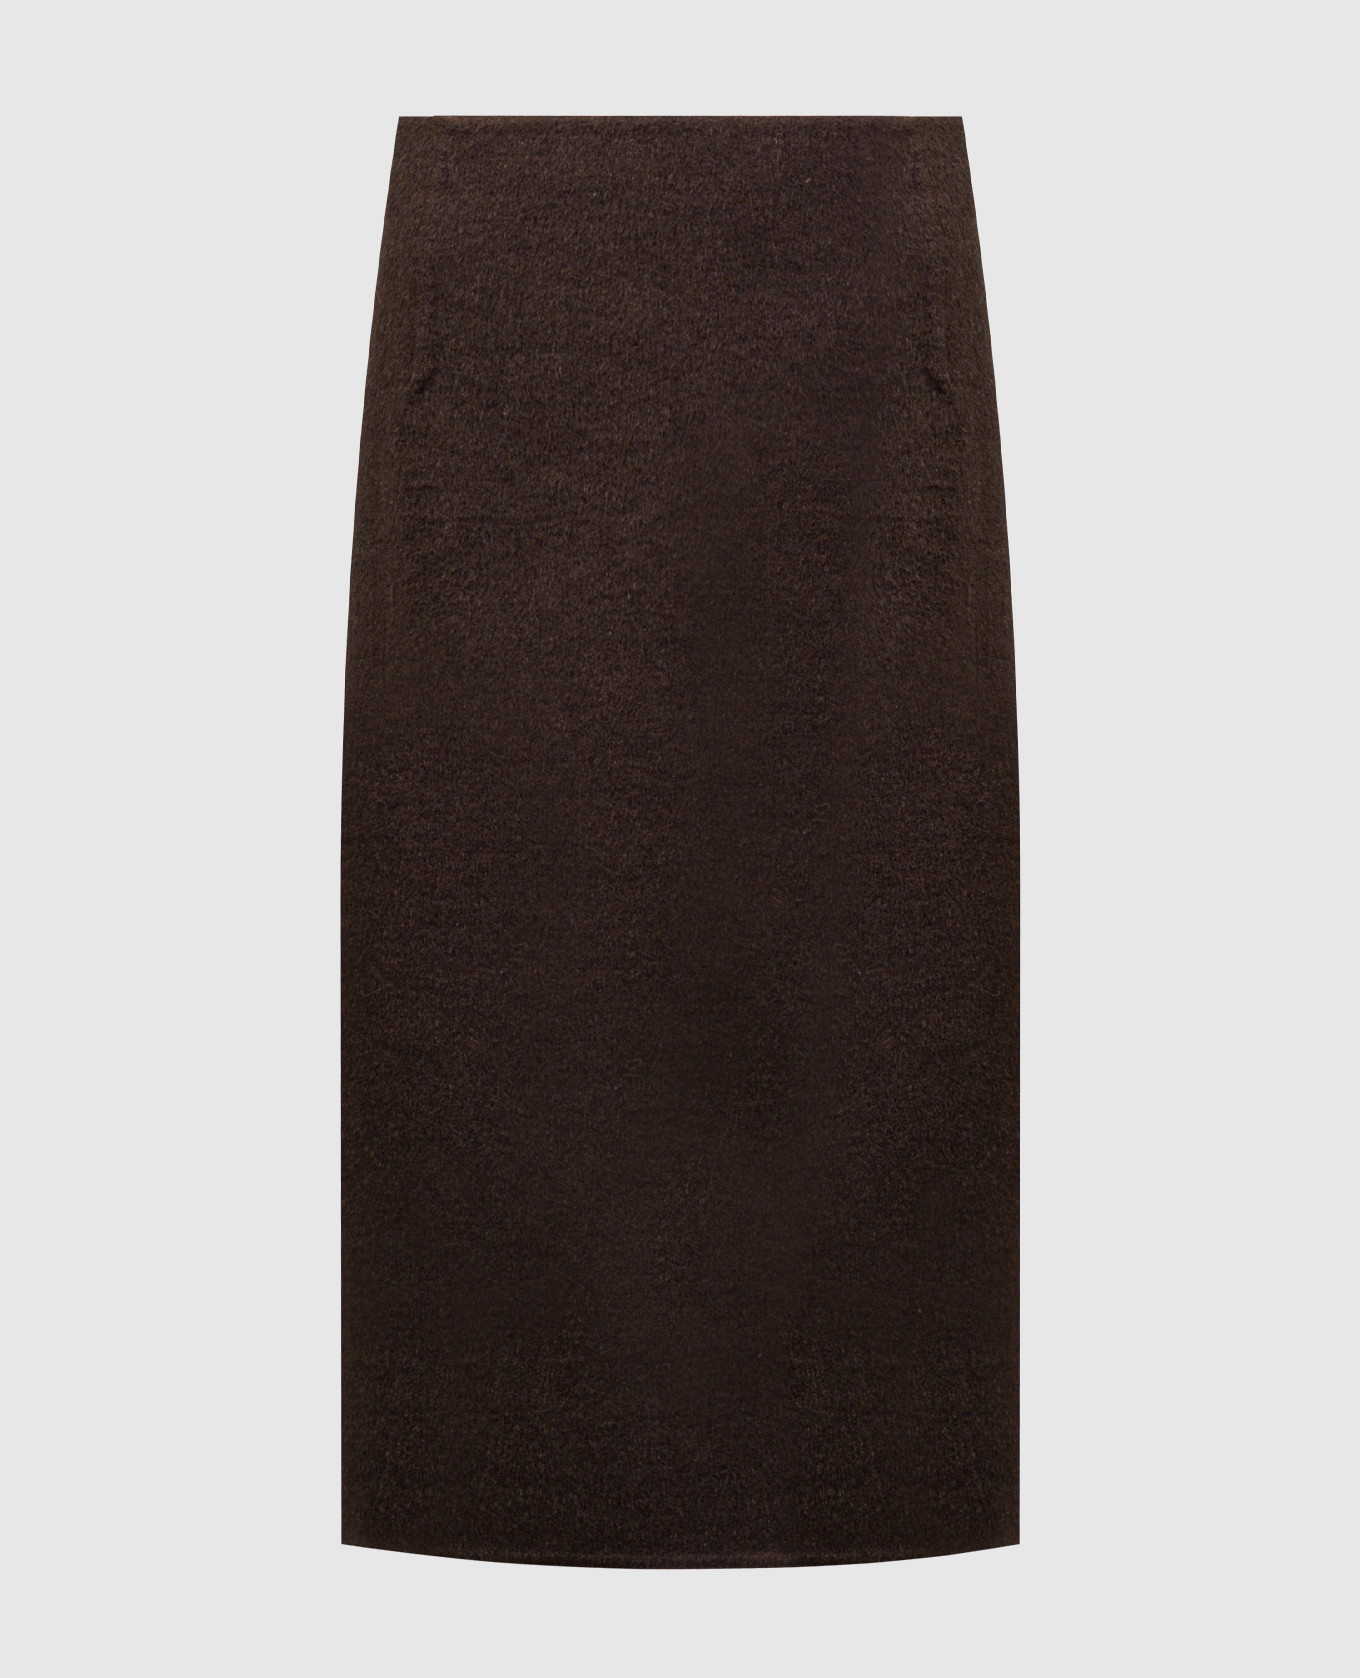 Brown midi skirt made of wool